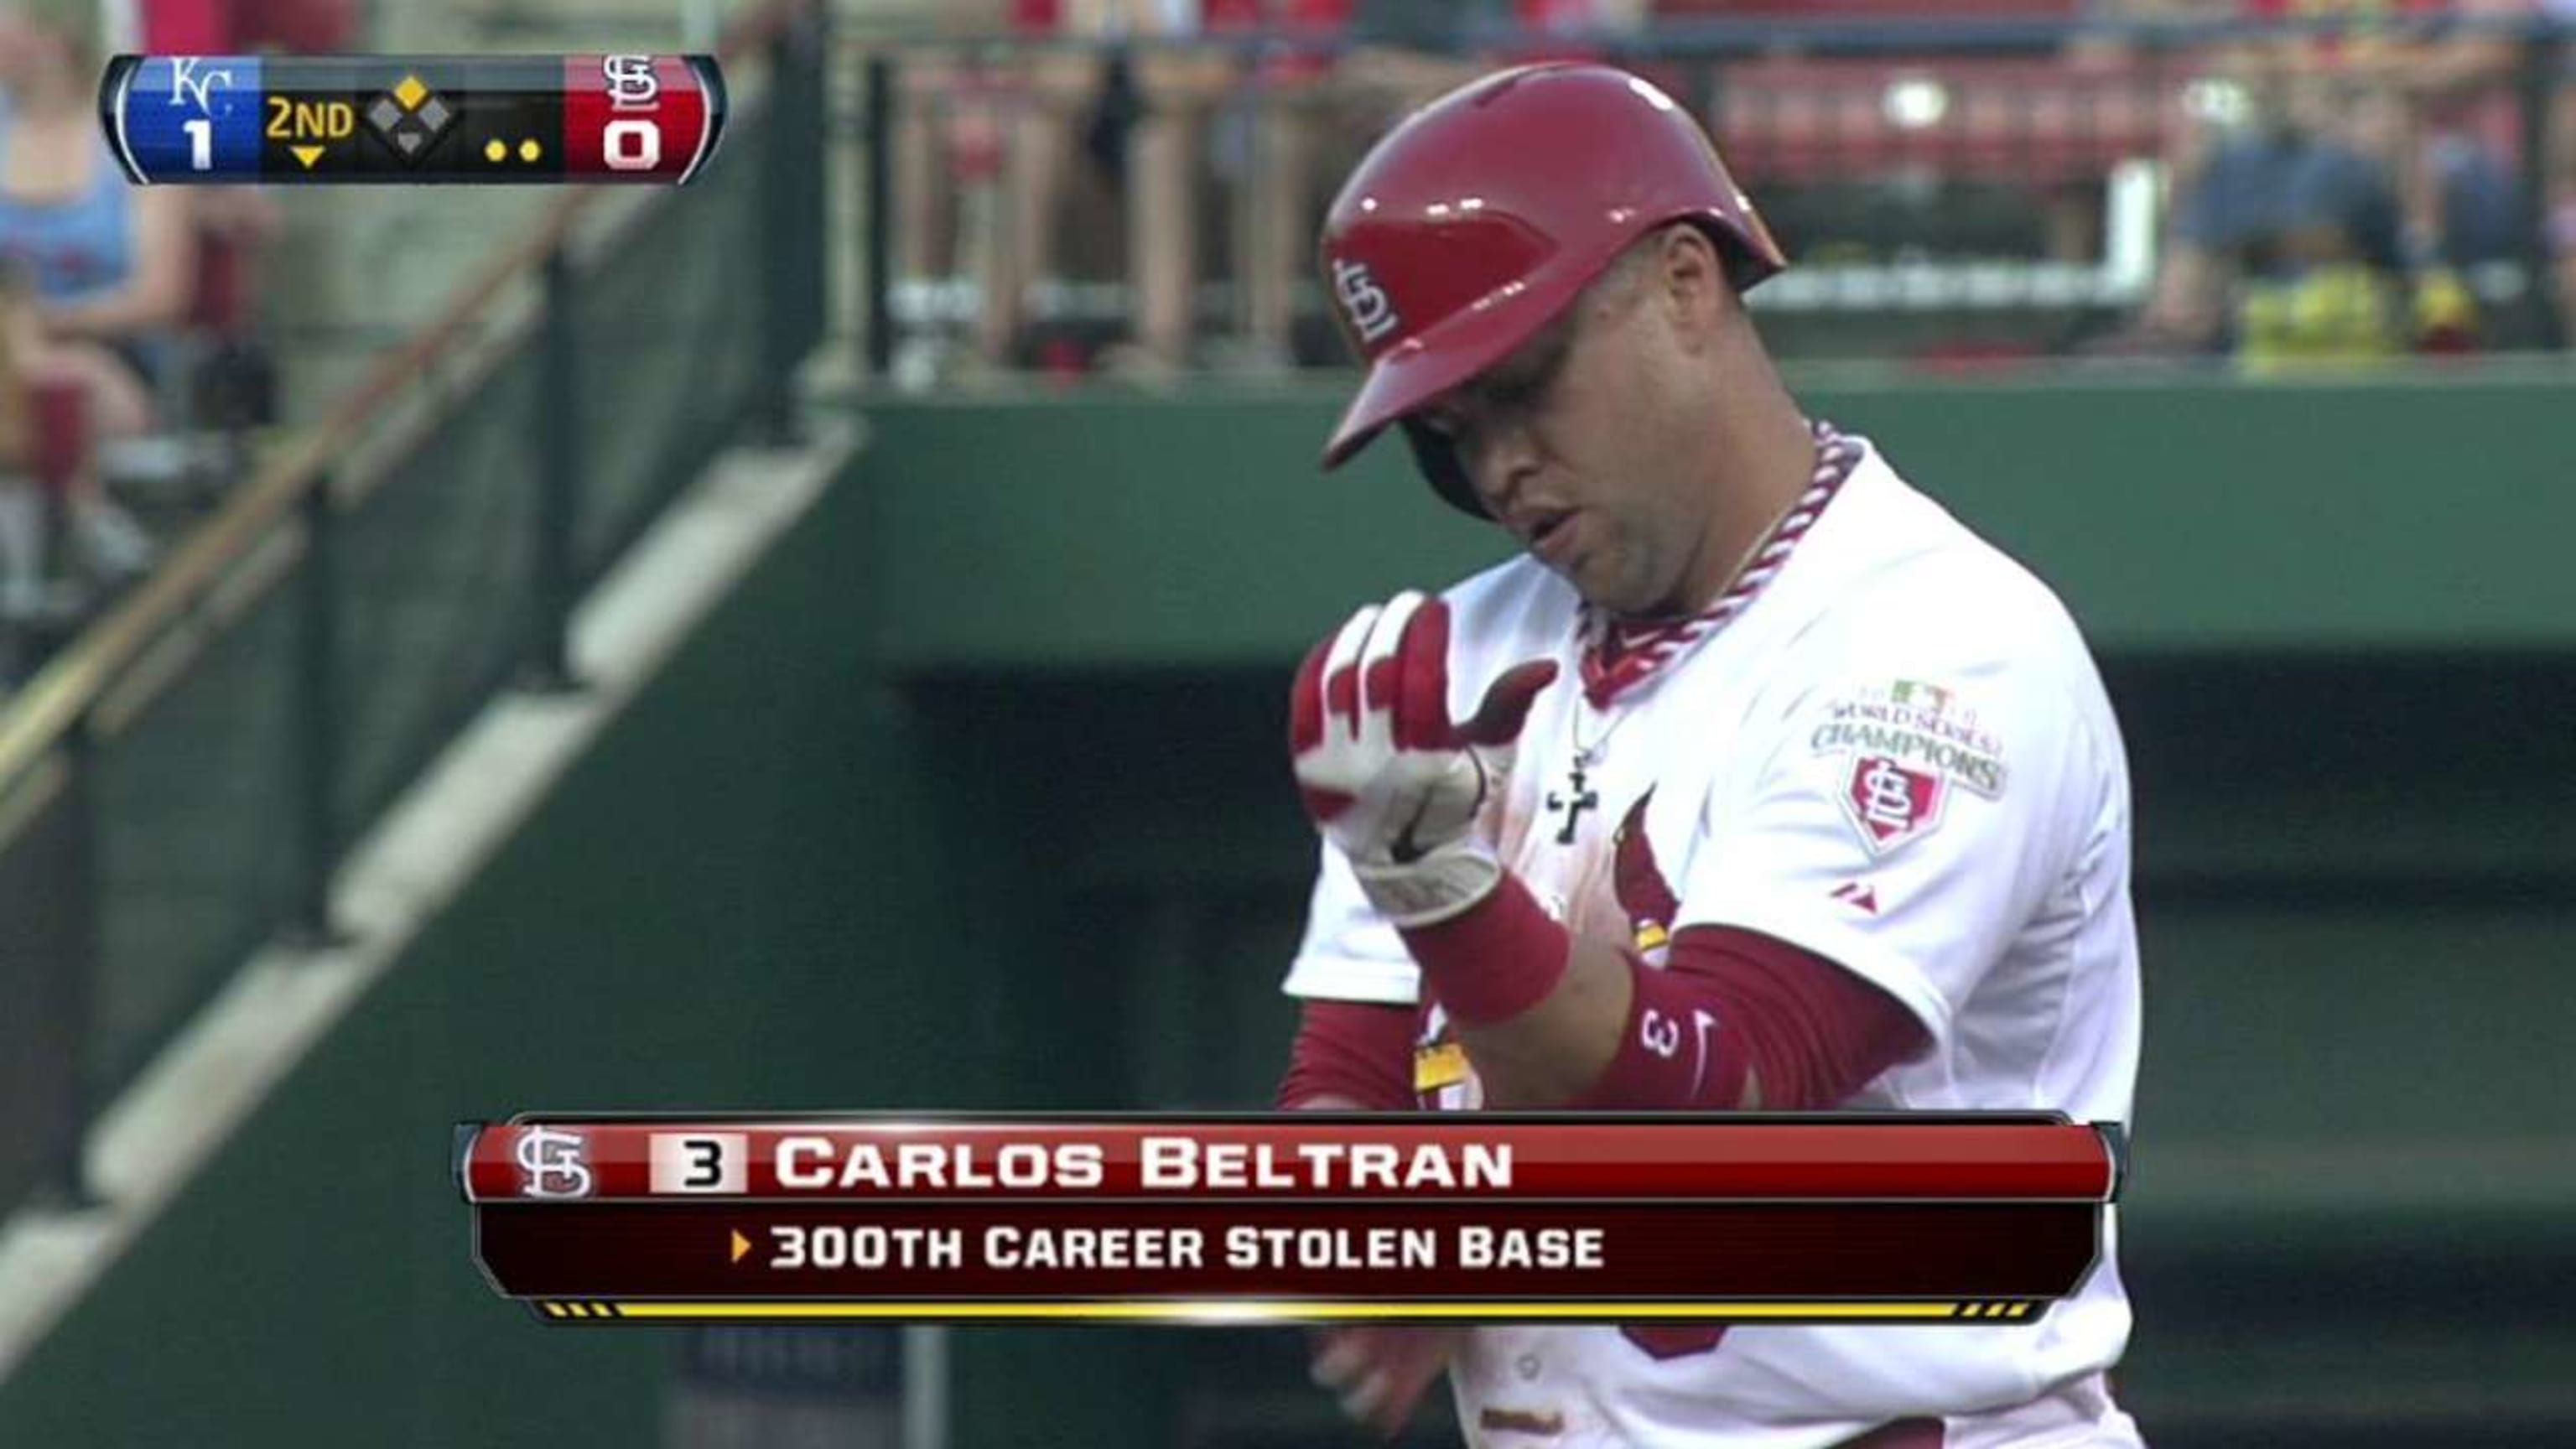 Ex-Yankees slugger Carlos Beltran should be Hall of Famer, ex-MLB